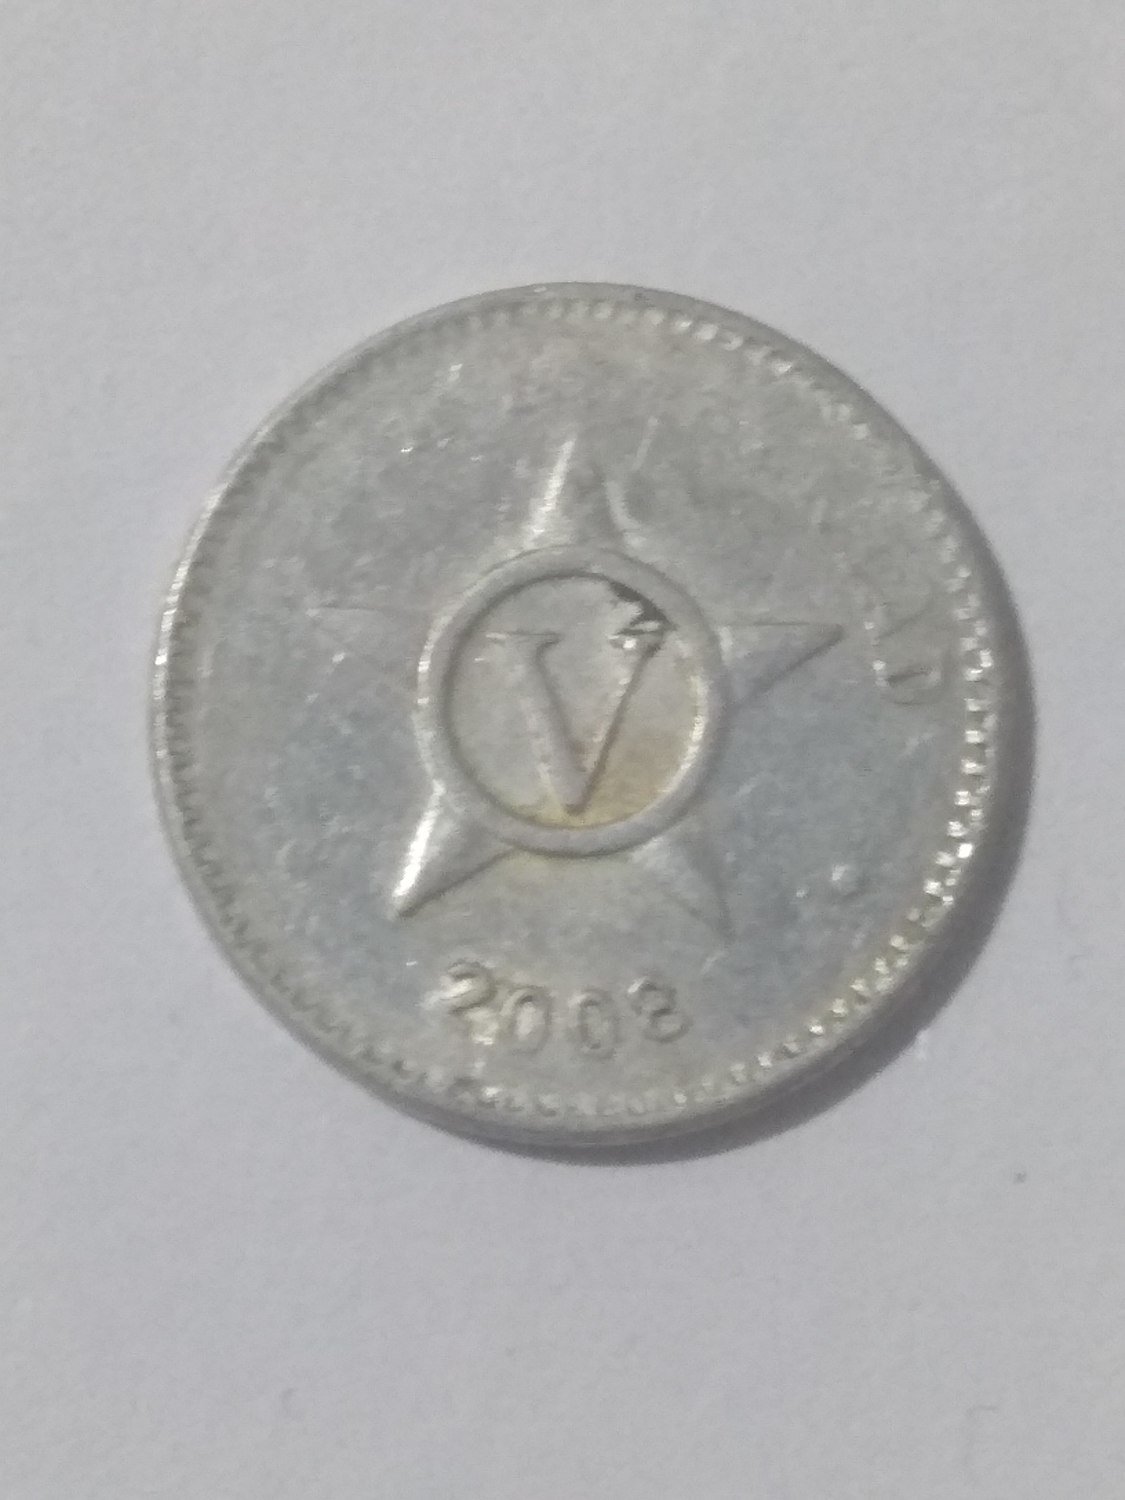 Cuba. 2008. 5 centavos CUP. Star. Type: 1915. Aluminium. 1.500 g., KM#34. F